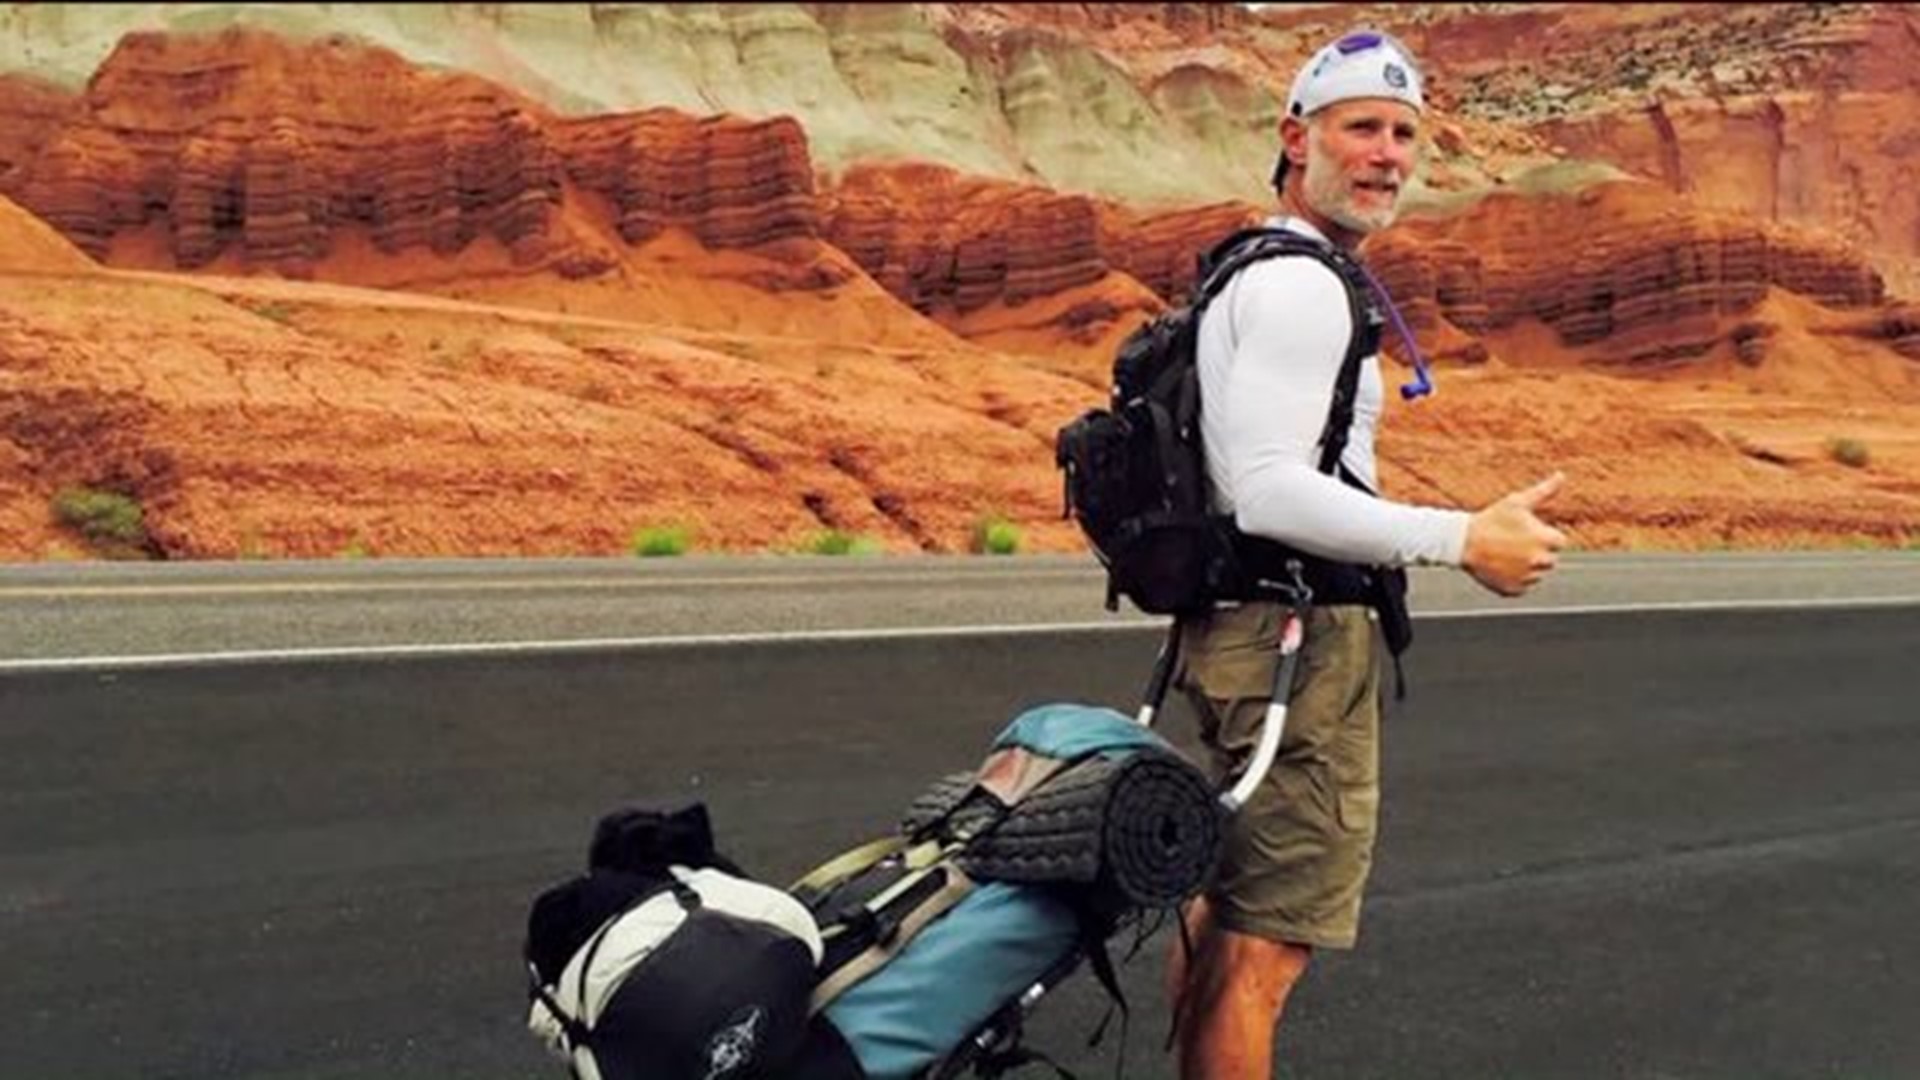 Windsor man completes 3,000-mile trek across America to honor our troops